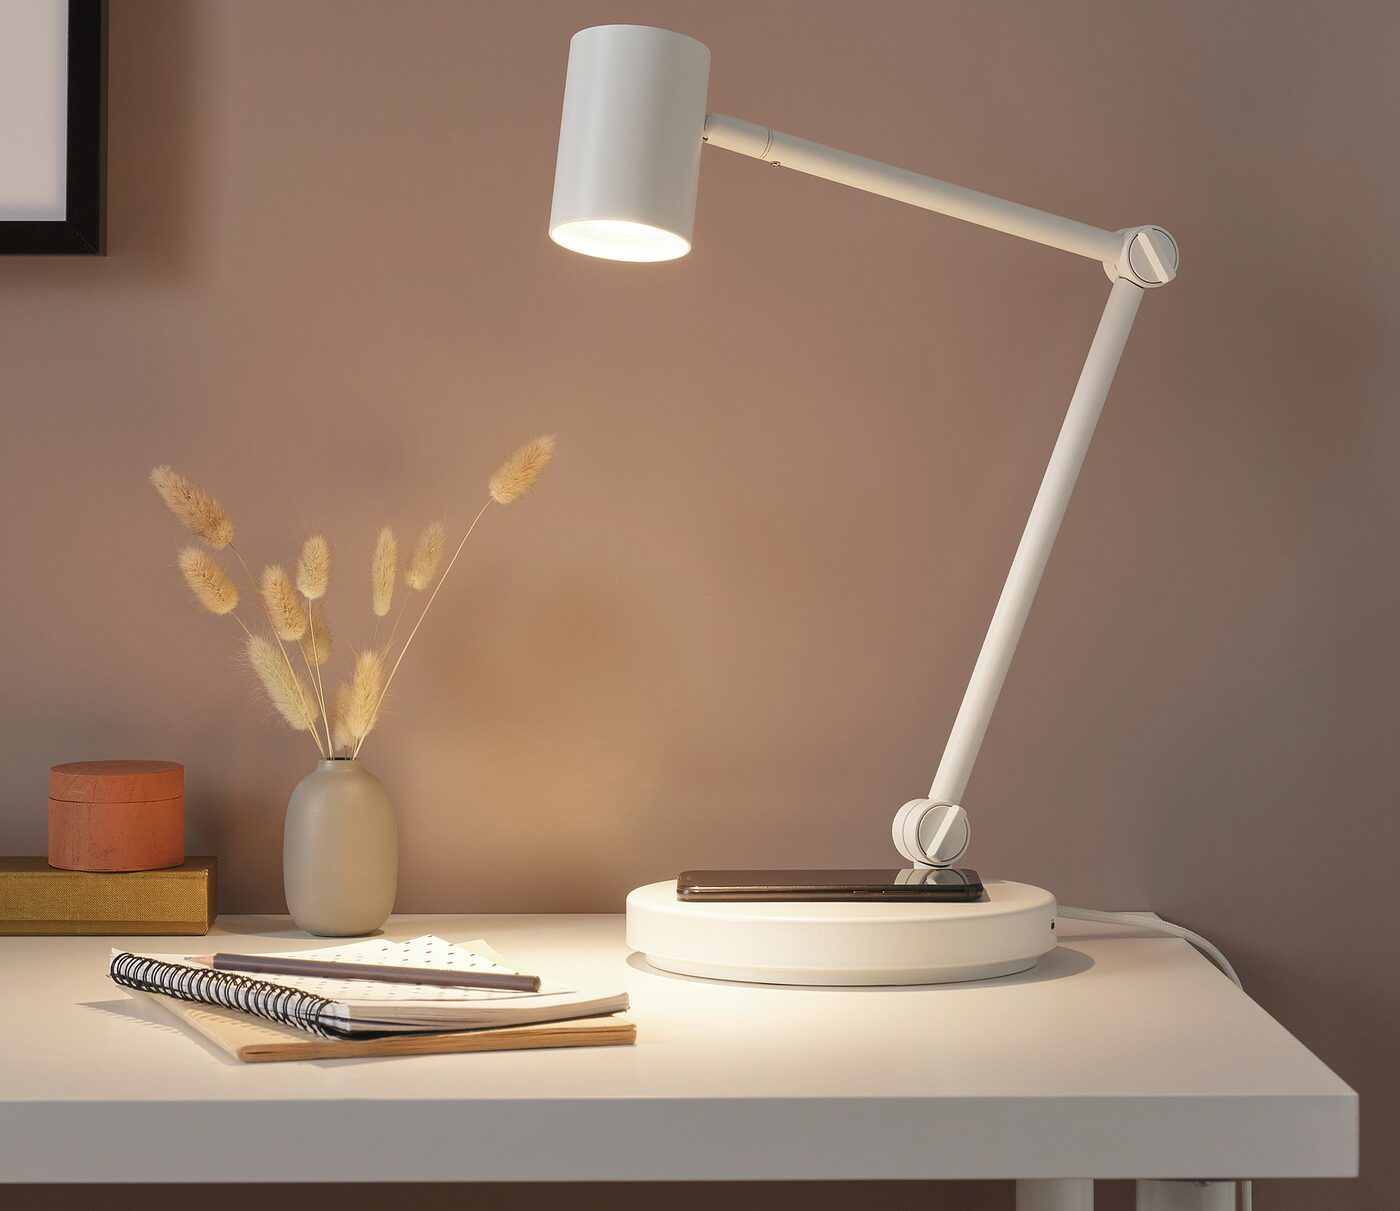 NYMANE work lamp by Ikea